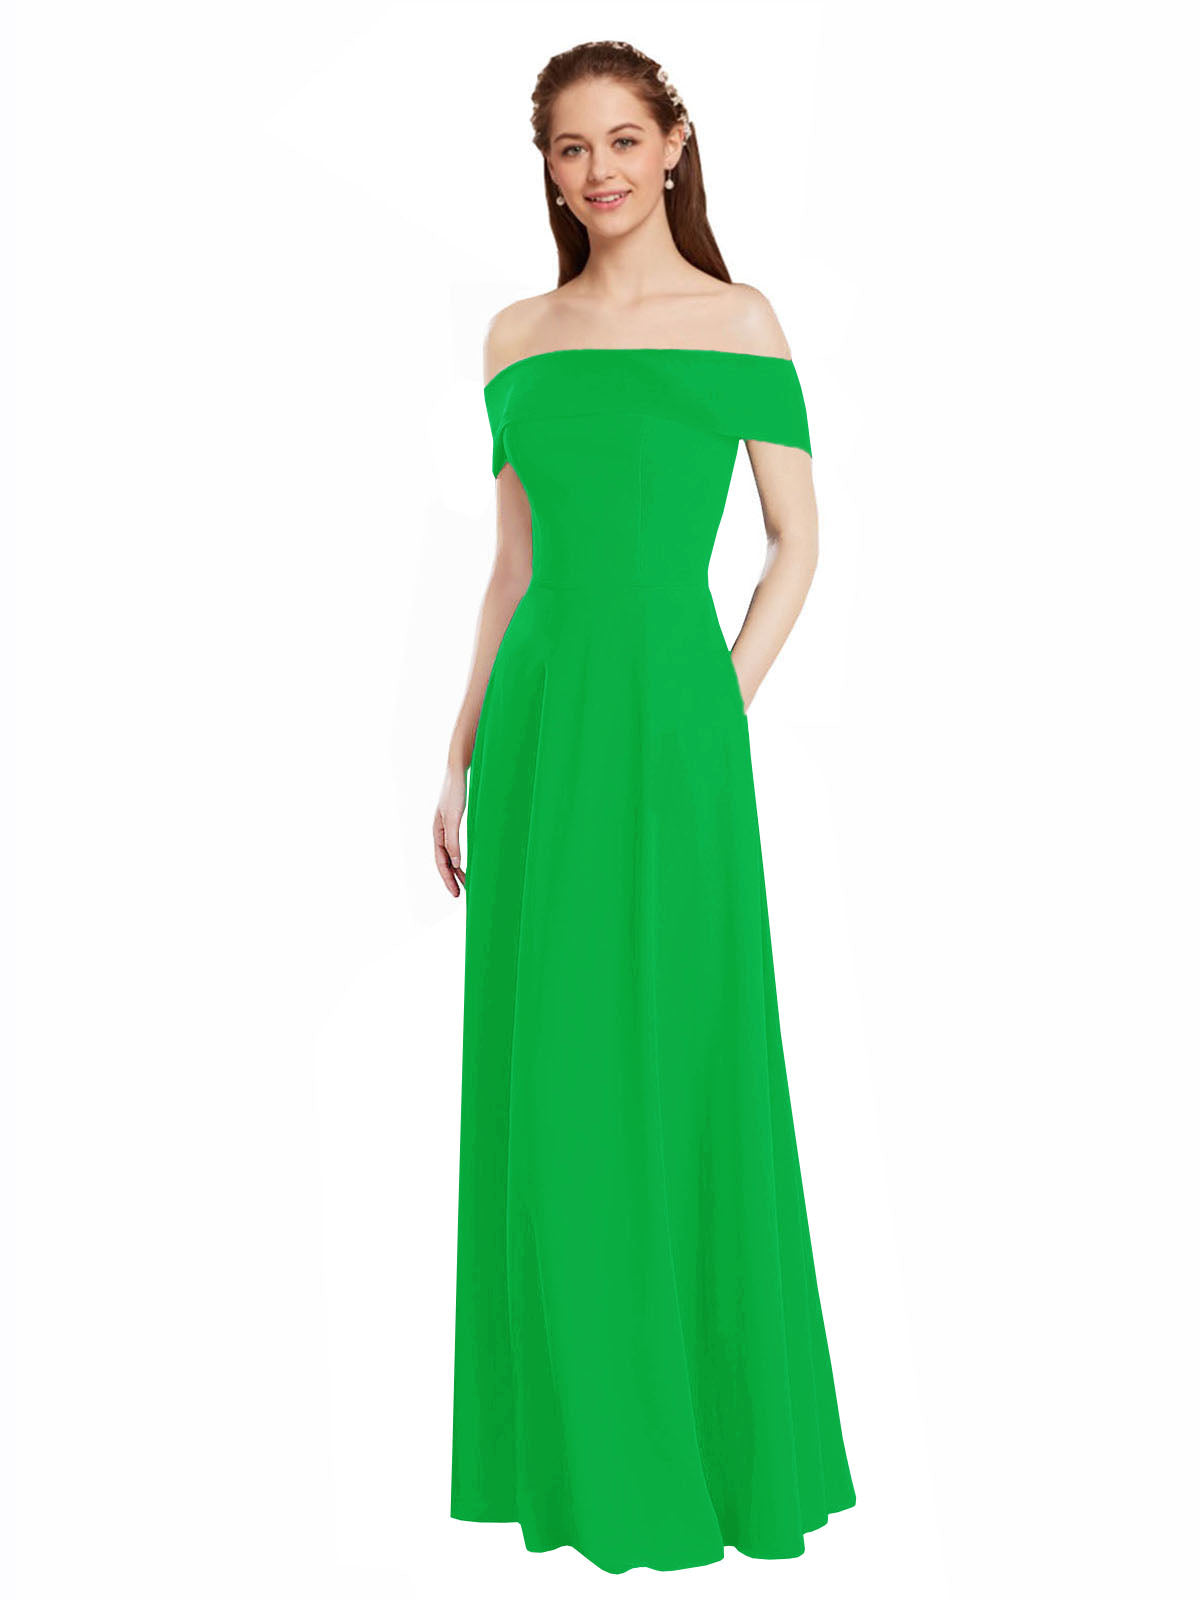 Green A-Line Off the Shoulder Cap Sleeves Long Bridesmaid Dress Lina